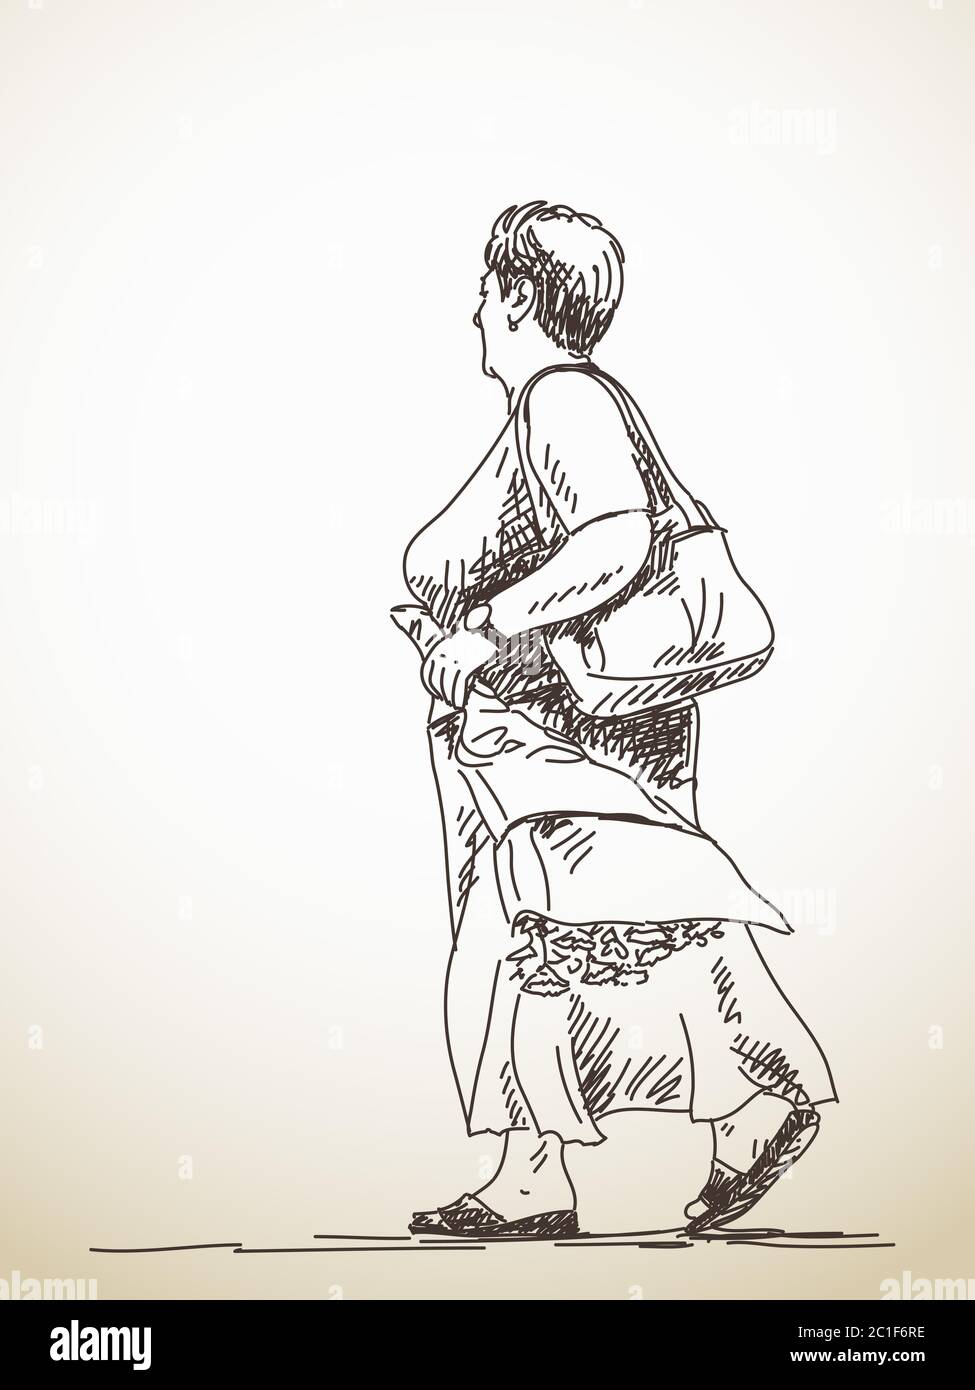 Sketch of walking woman Hand drawn illustration Stock Vector Image ...